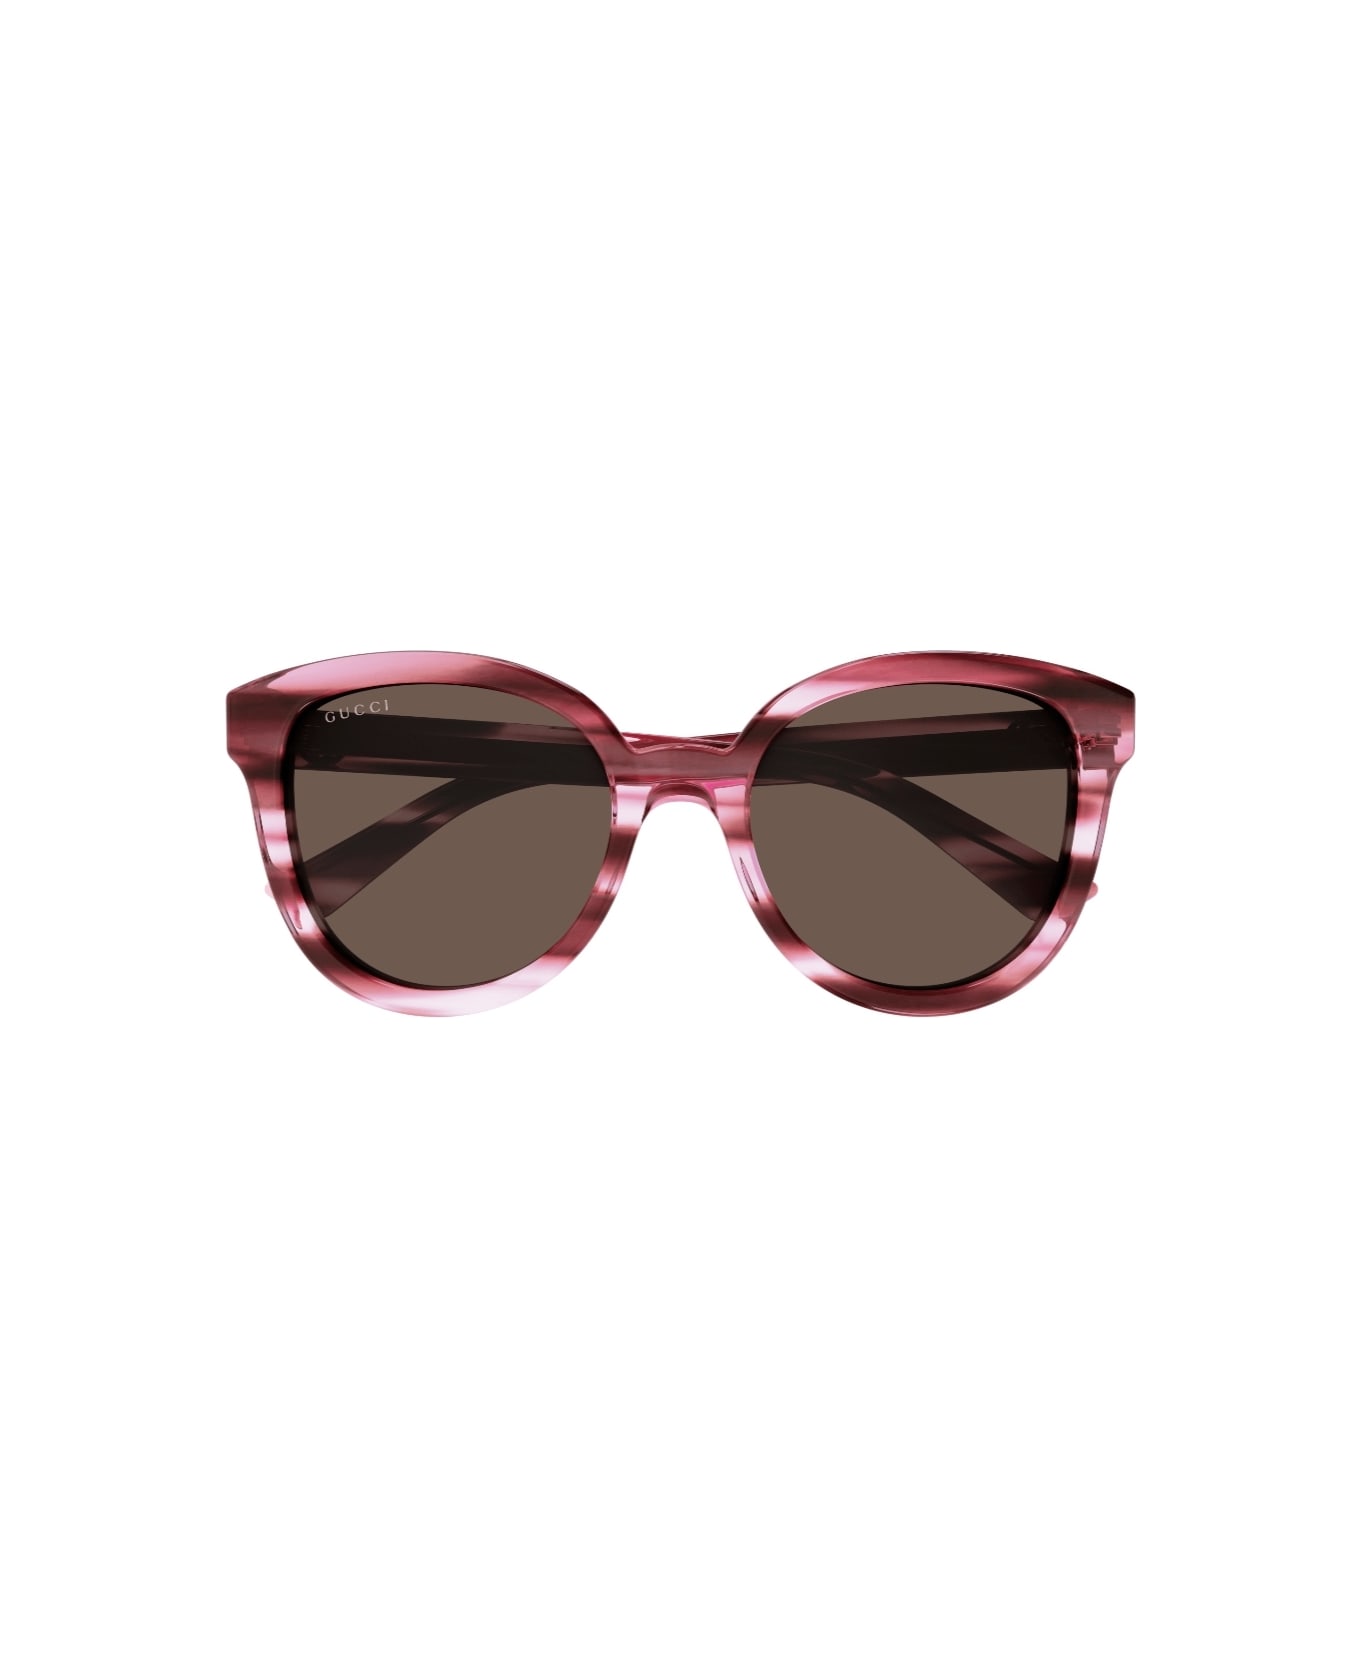 Gucci Eyewear GG1315S003 Sunglasses - Rosa サングラス